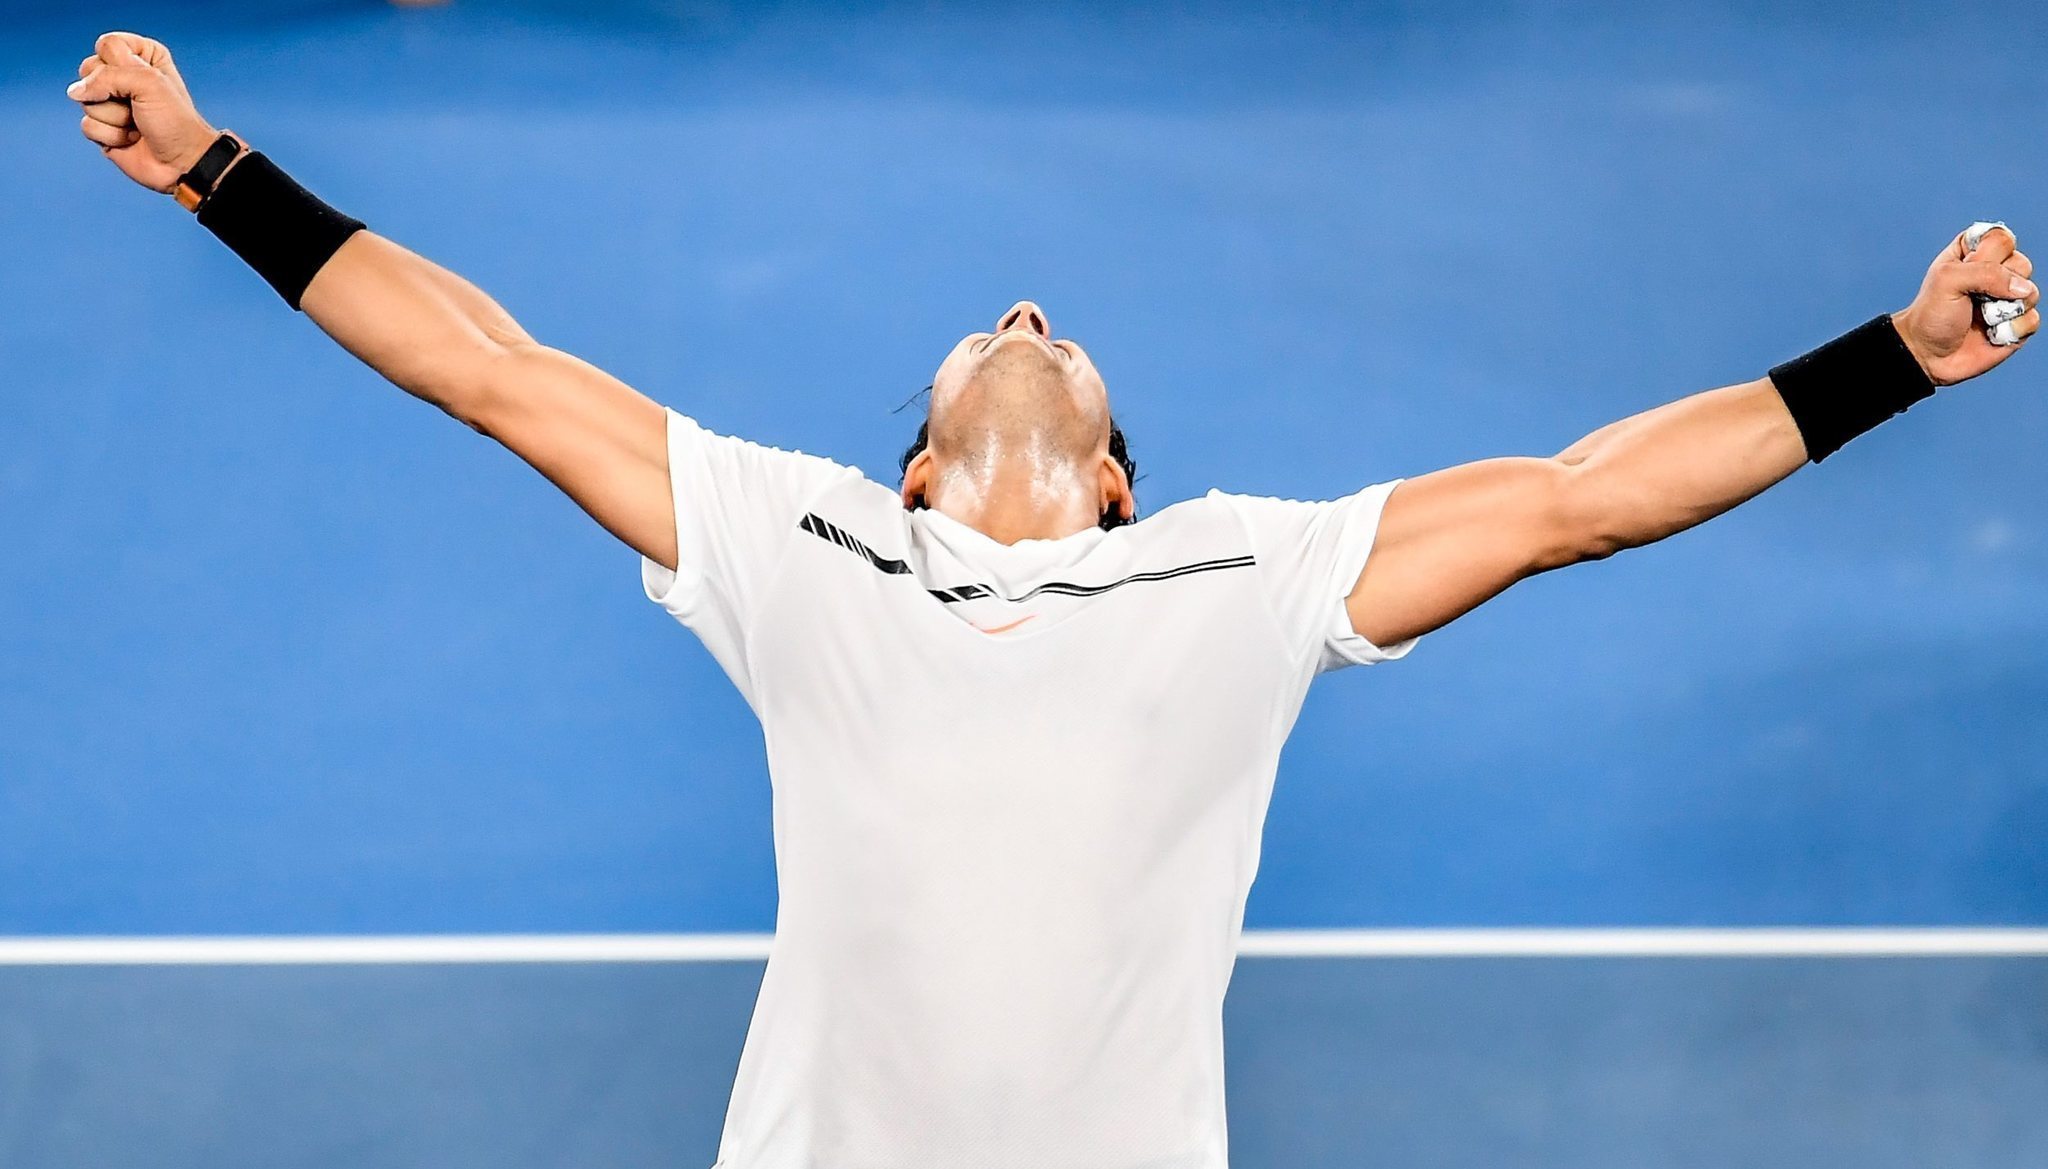 Rafael Nadal wins to set up Australian Open classic final against Roger Federer